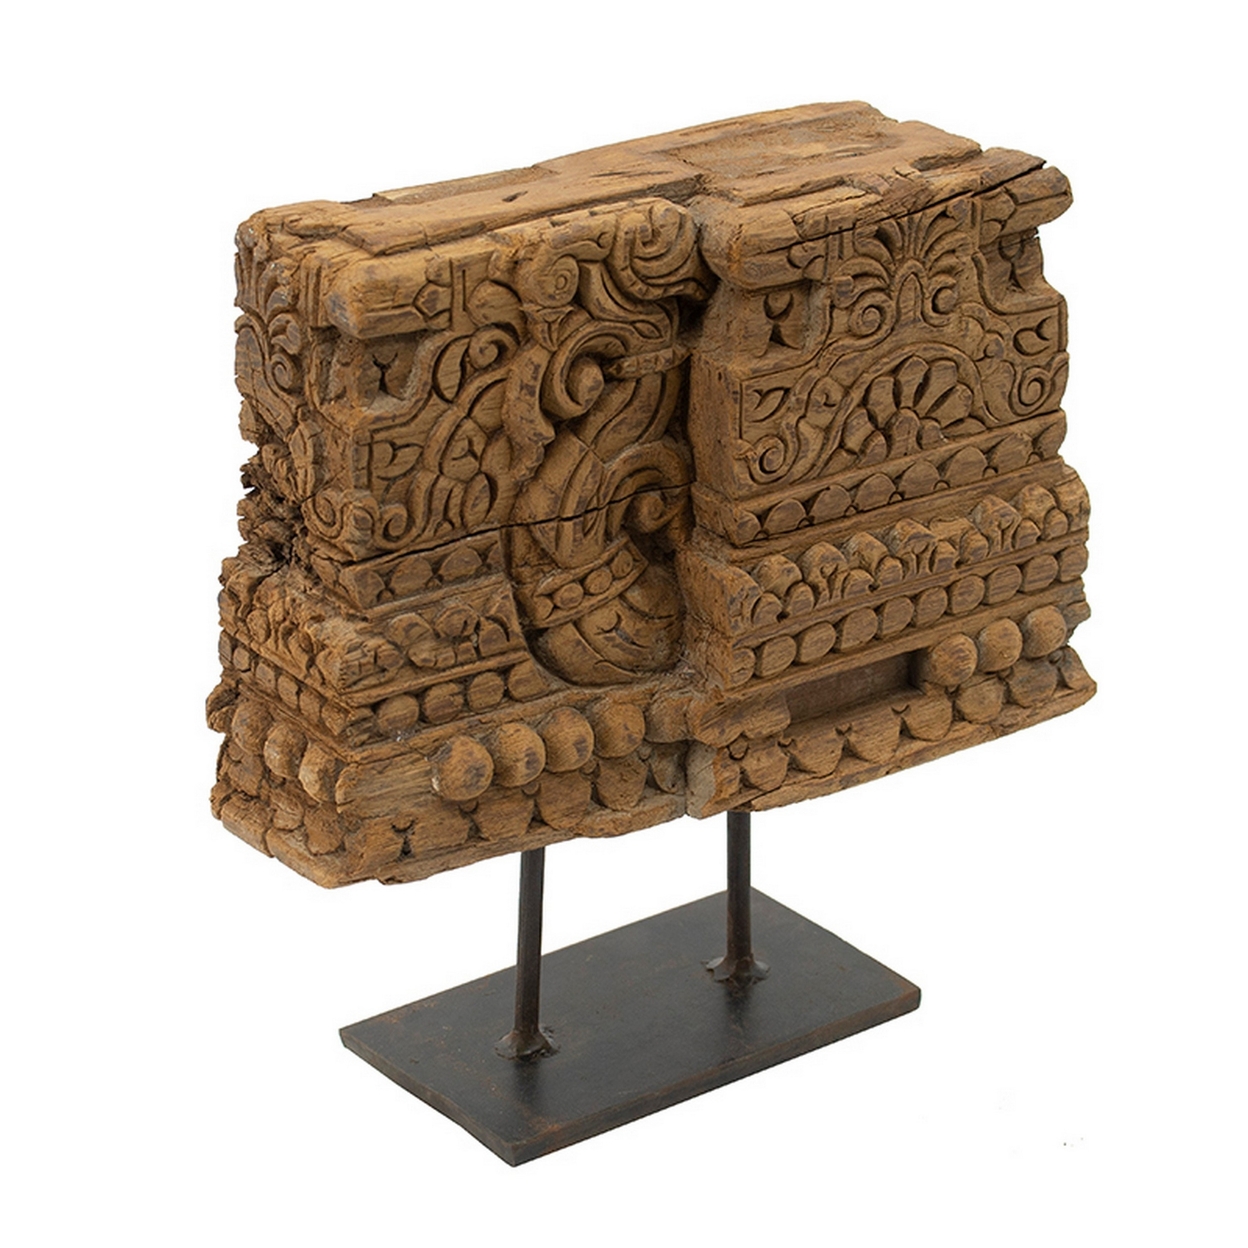 13 Inch Decorative Carved Tabletop Sculpture, Brown Wood, Black Metal Base- Saltoro Sherpi